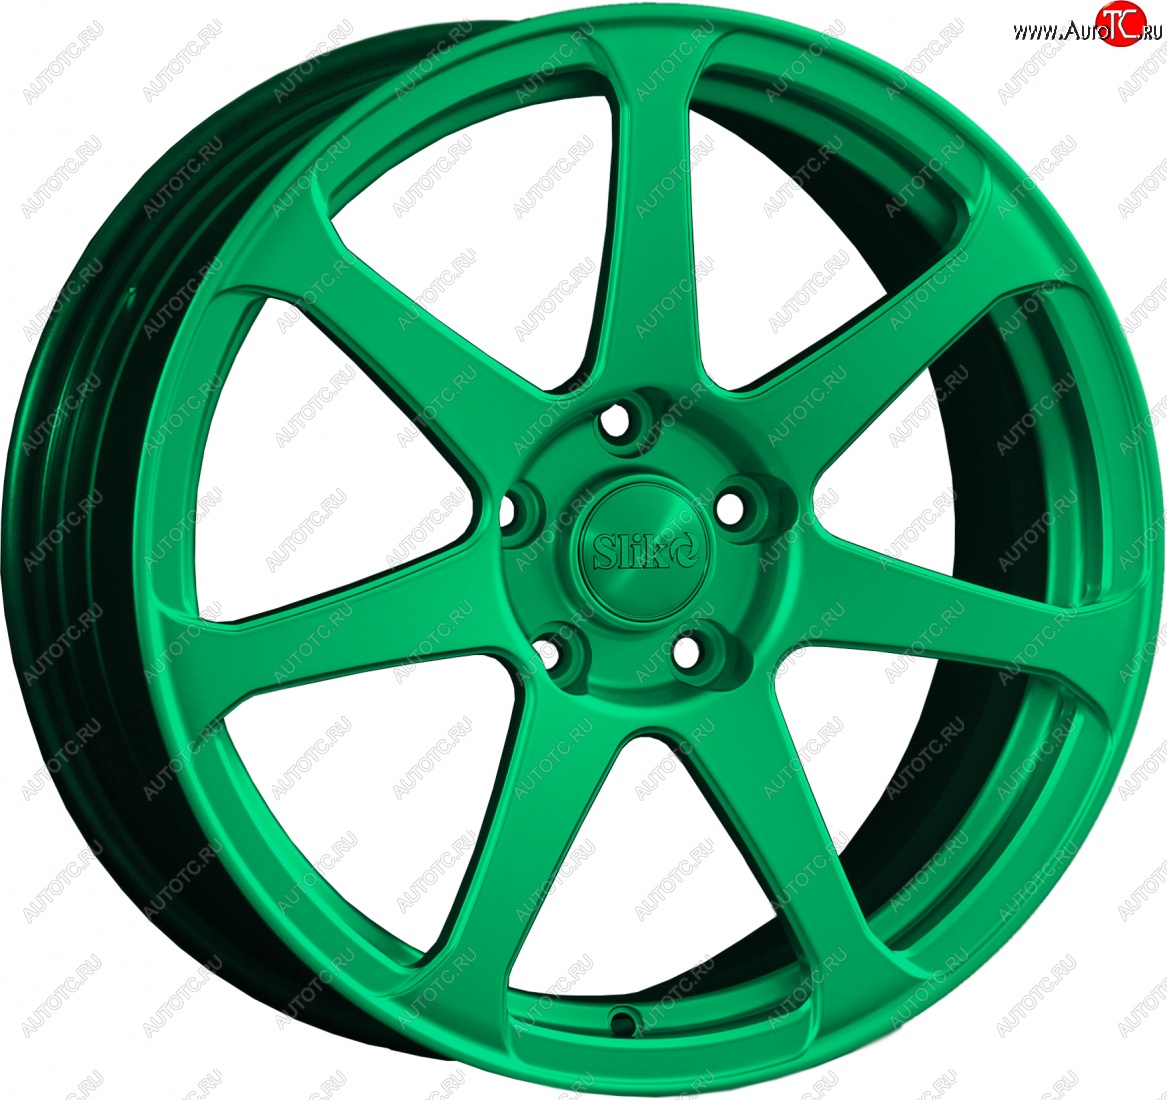 14 499 р. Кованый диск Slik classik R17x7.5 Candy Green изумрудно-зеленый 7.5x17 Chevrolet Lanos T100 седан (2002-2017) 4x100.0xDIA56.6xET49.0 (Цвет: Candy Green изумрудно-зеленый 7.5x17)